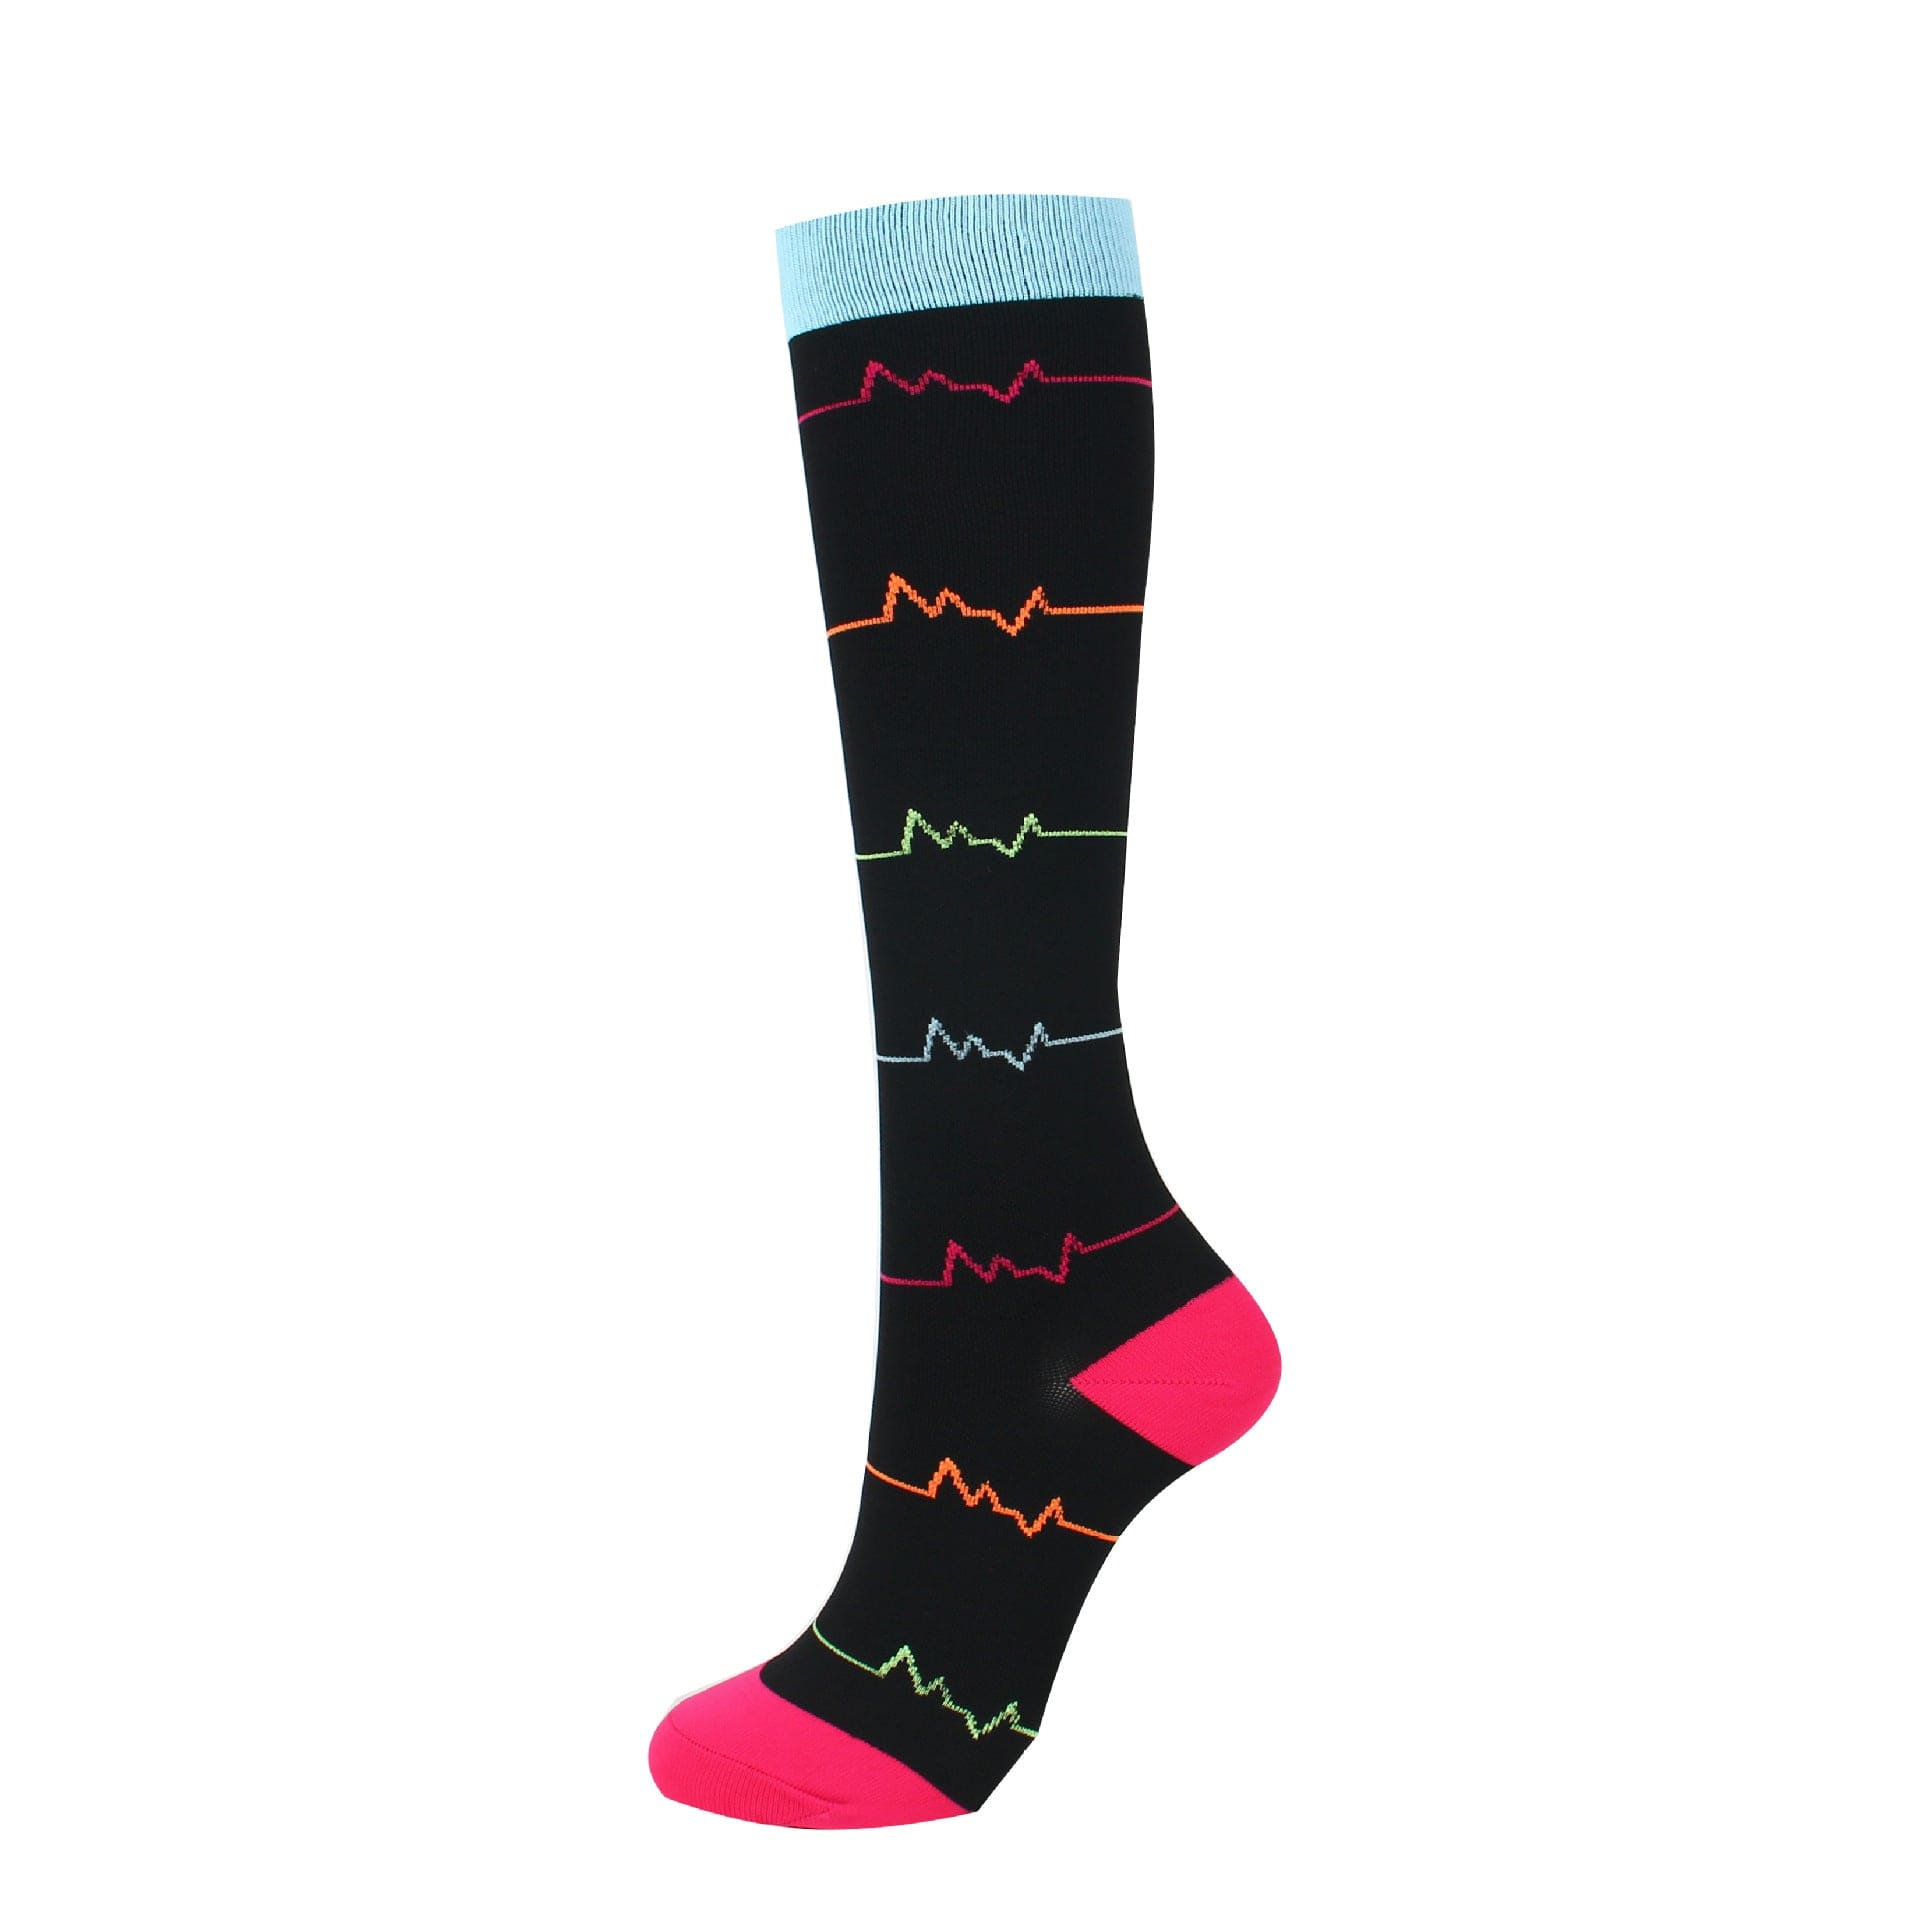 eszy2find  Share | Wishlist | Report Ladies ru 17style / L XL Ladies running stretch compression sports socks